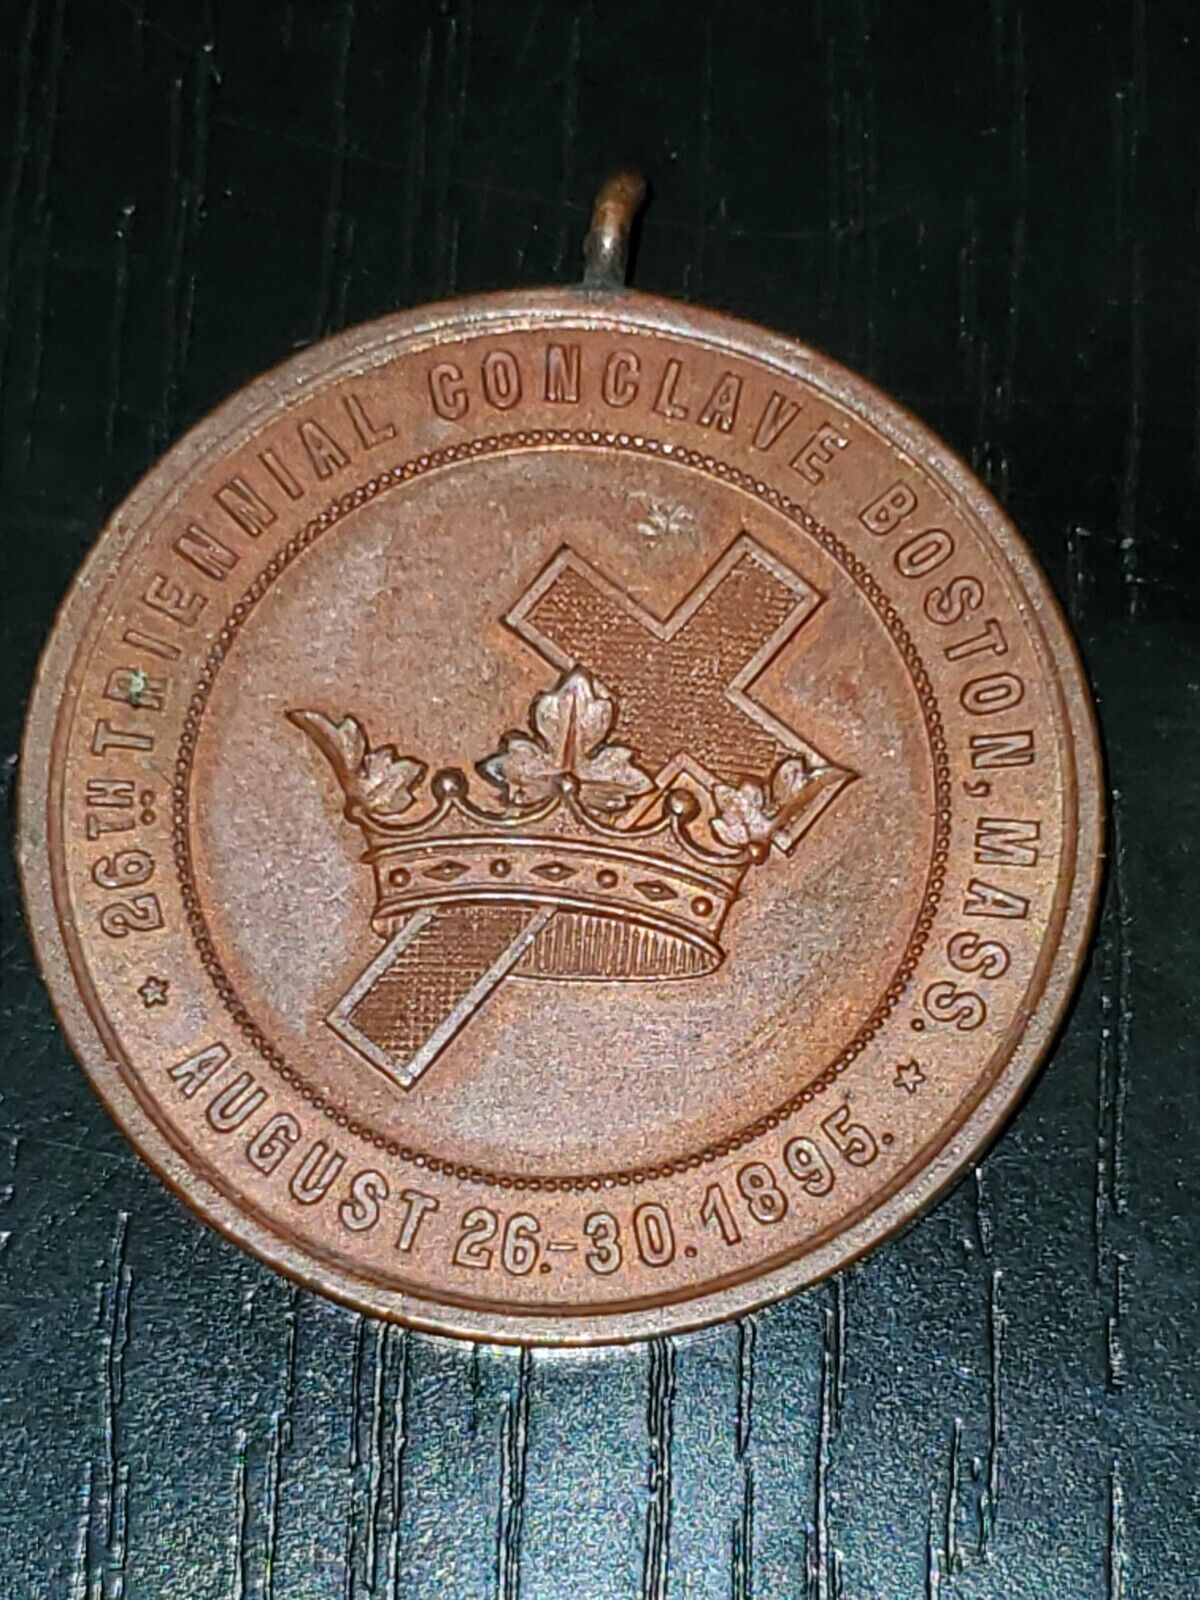 1895 20th Triennial Masonic Building Springfield Mass Medal L@@K